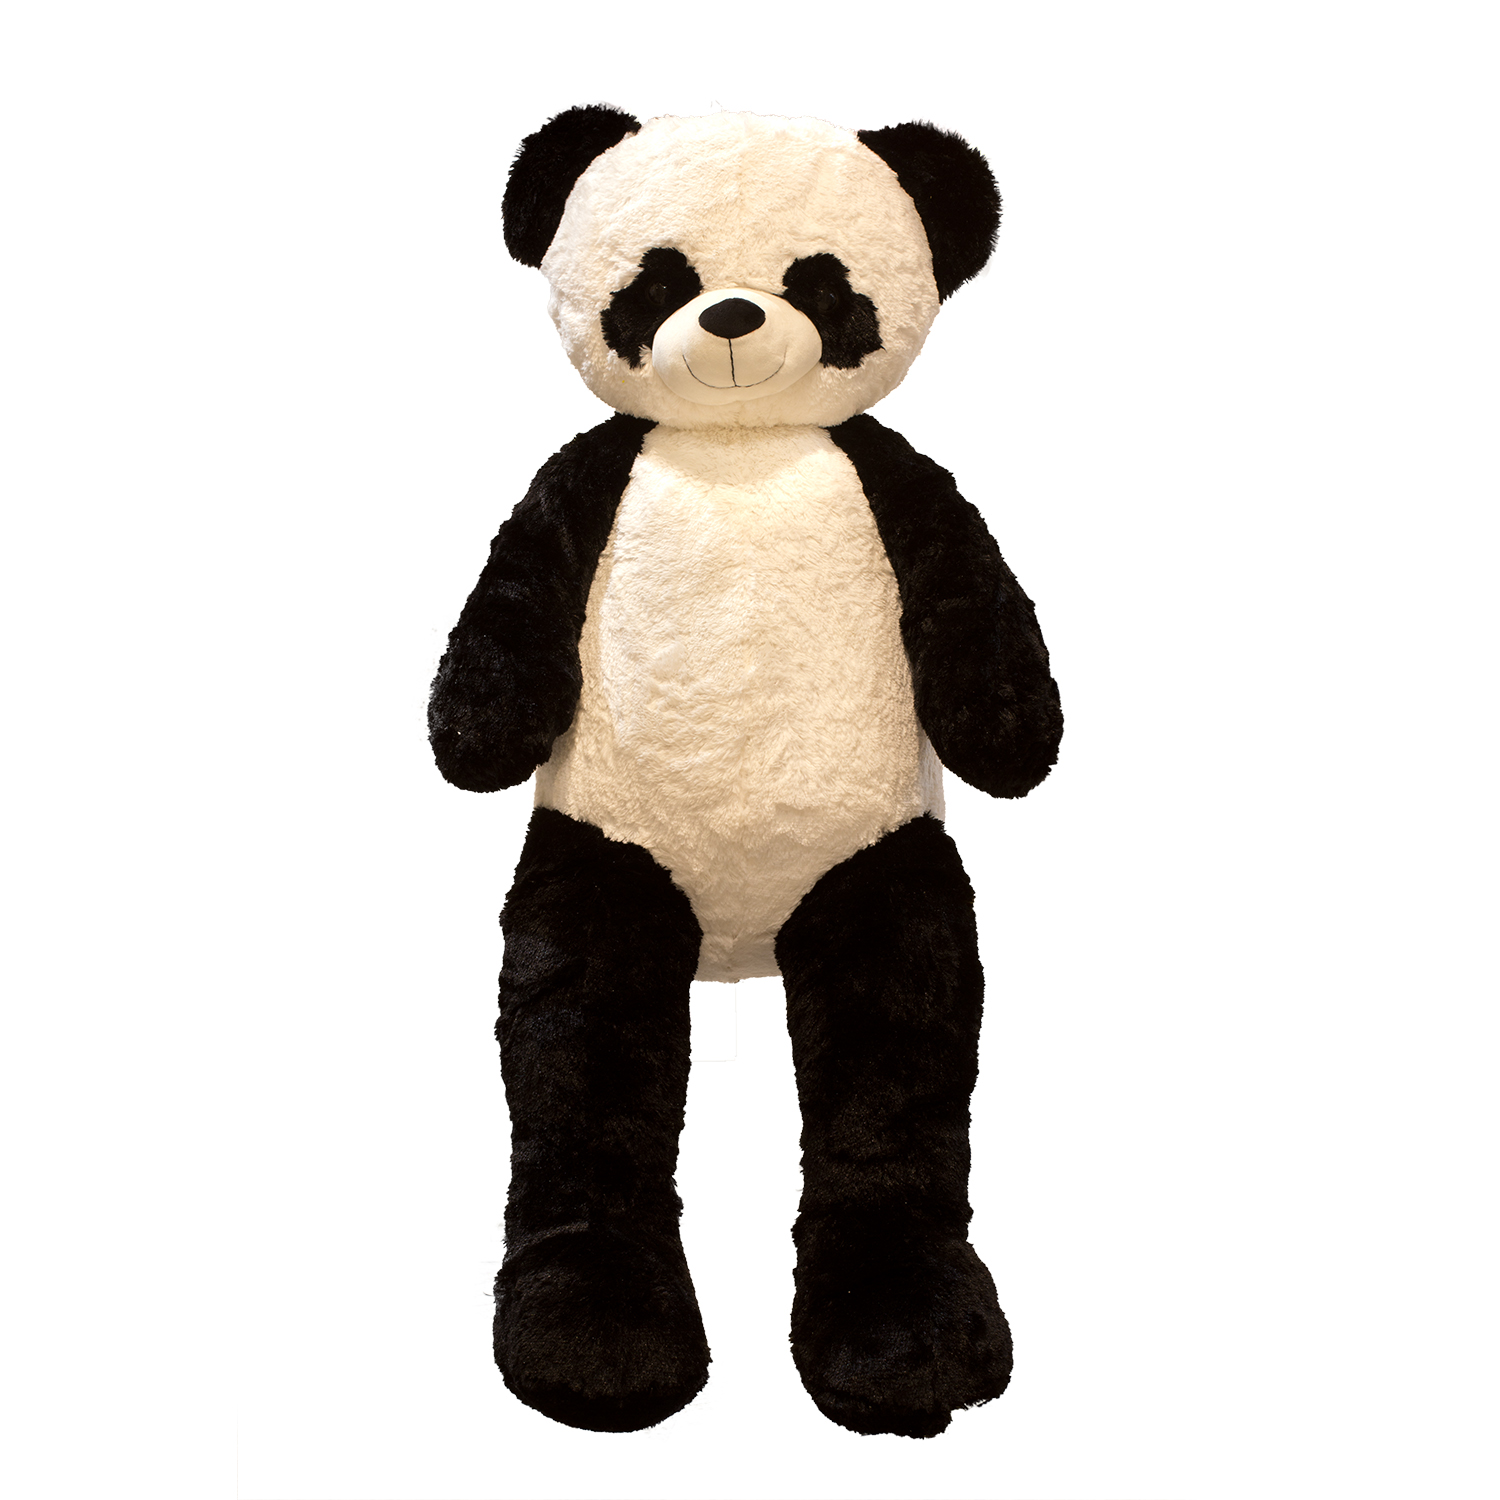 Riesen Teddy Bär Groß XXL Panda Kuschelbär GEFÜLLT Stofftier Plüschtier 